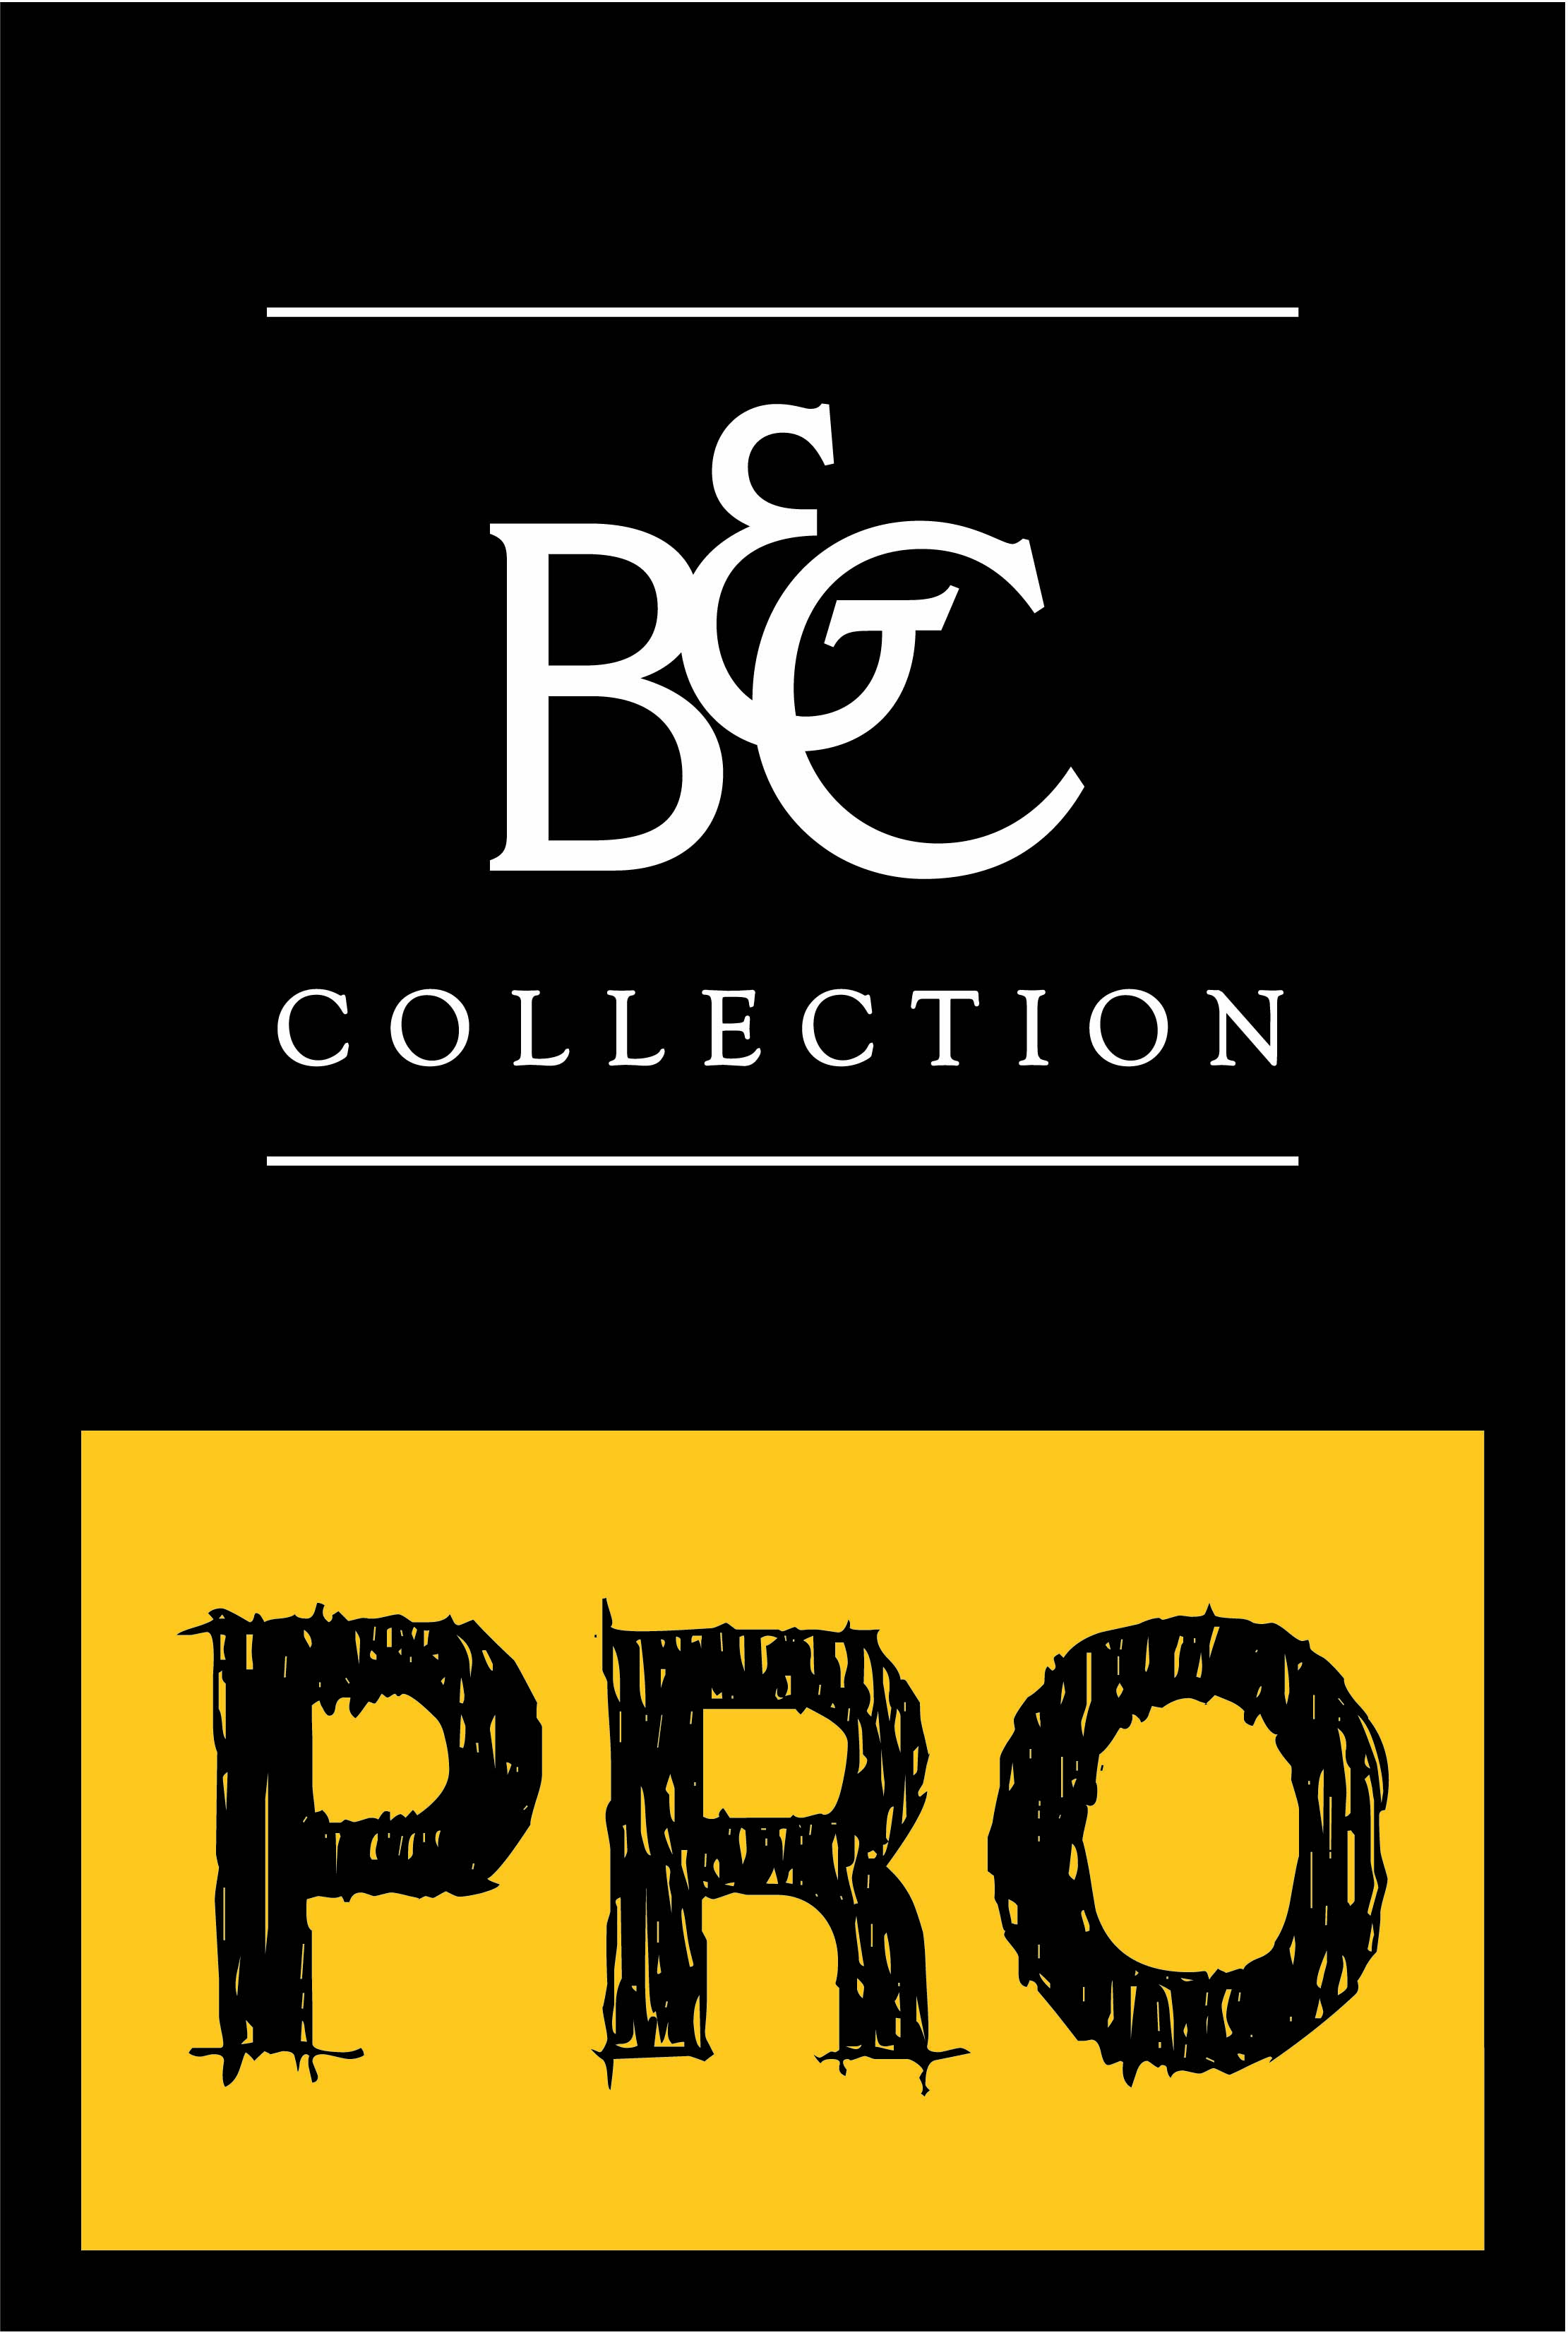 Jacket Shelter Pro - BCJUC41 - B&C Pro Collection